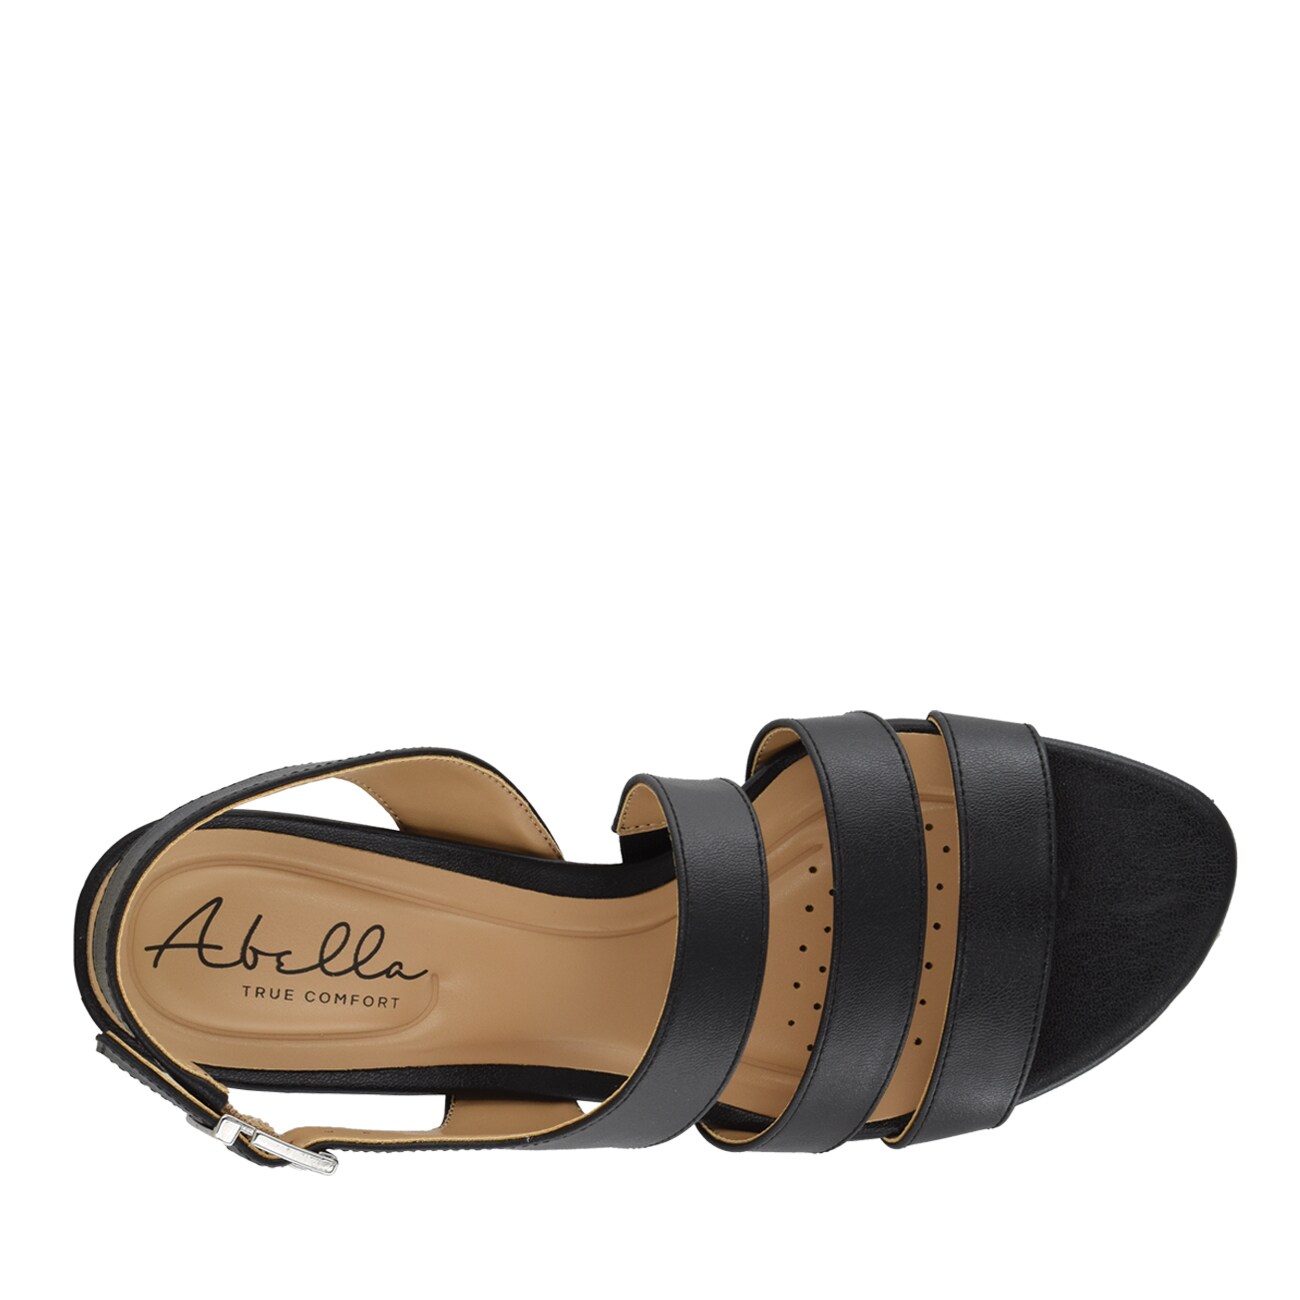 abella true comfort shoes